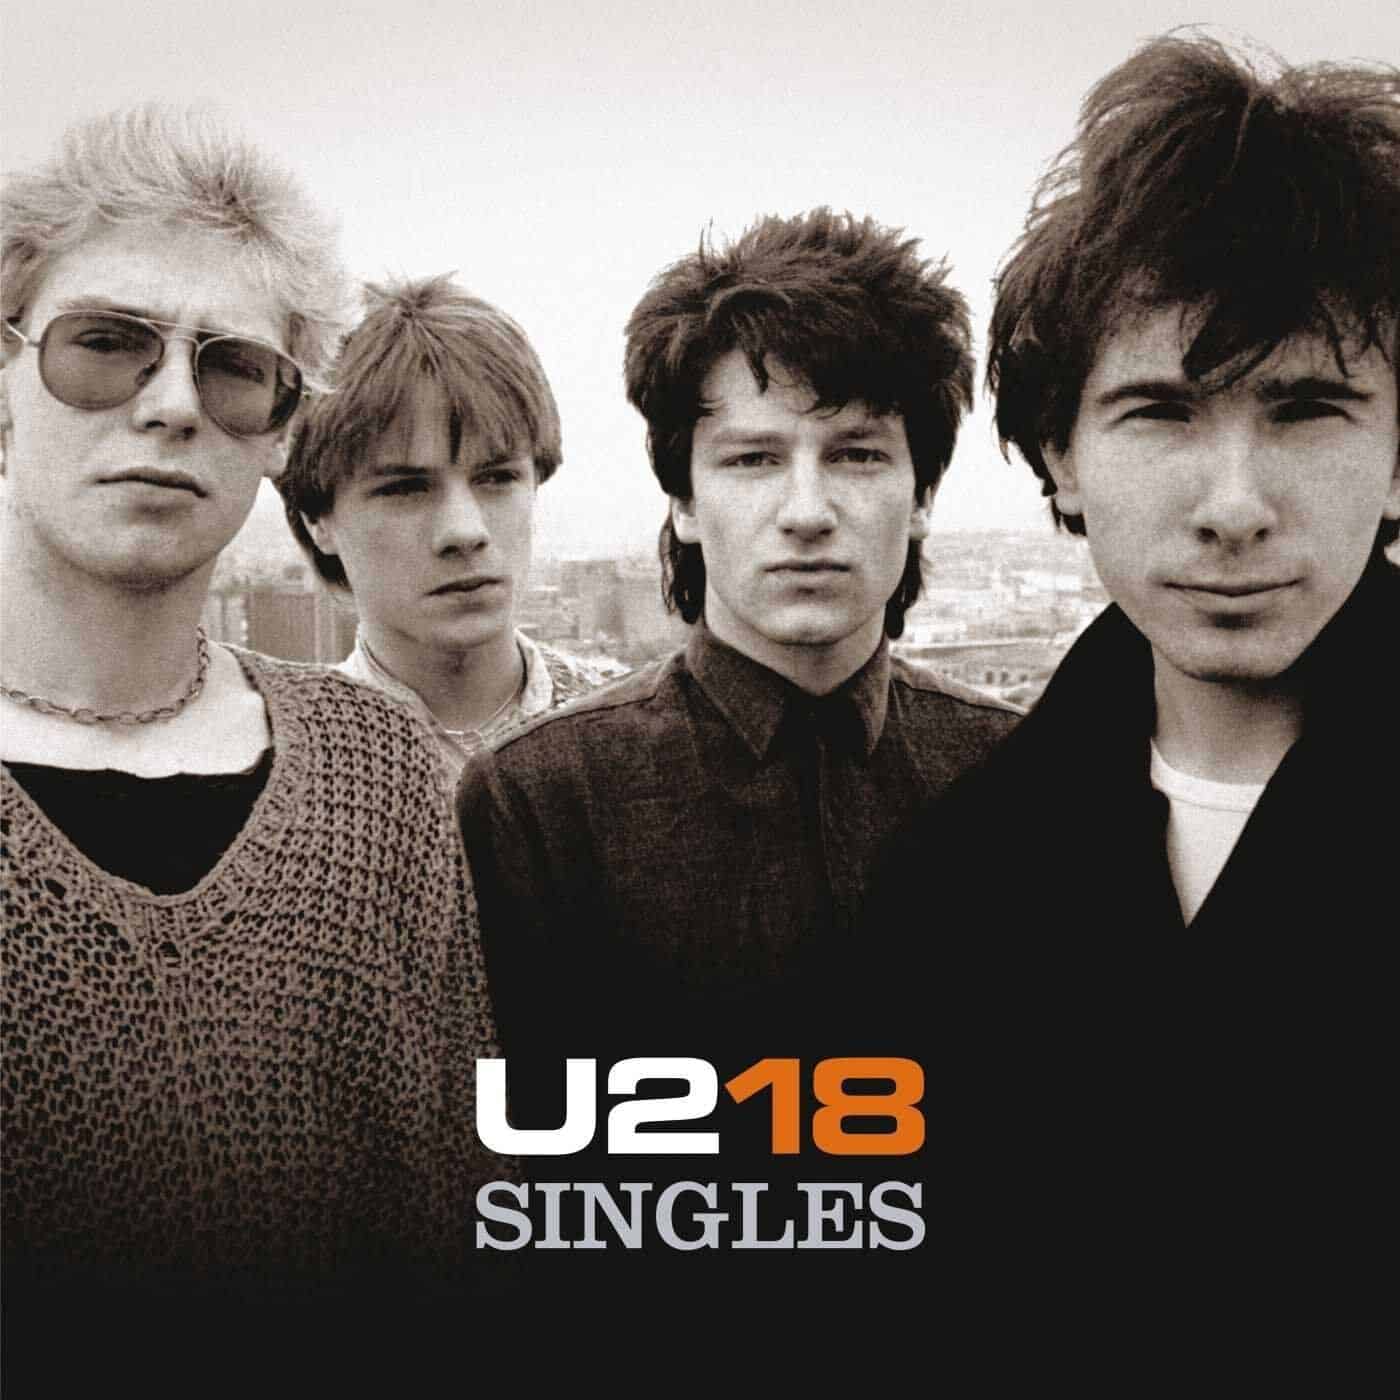 u2 - U218 THE SINGLES